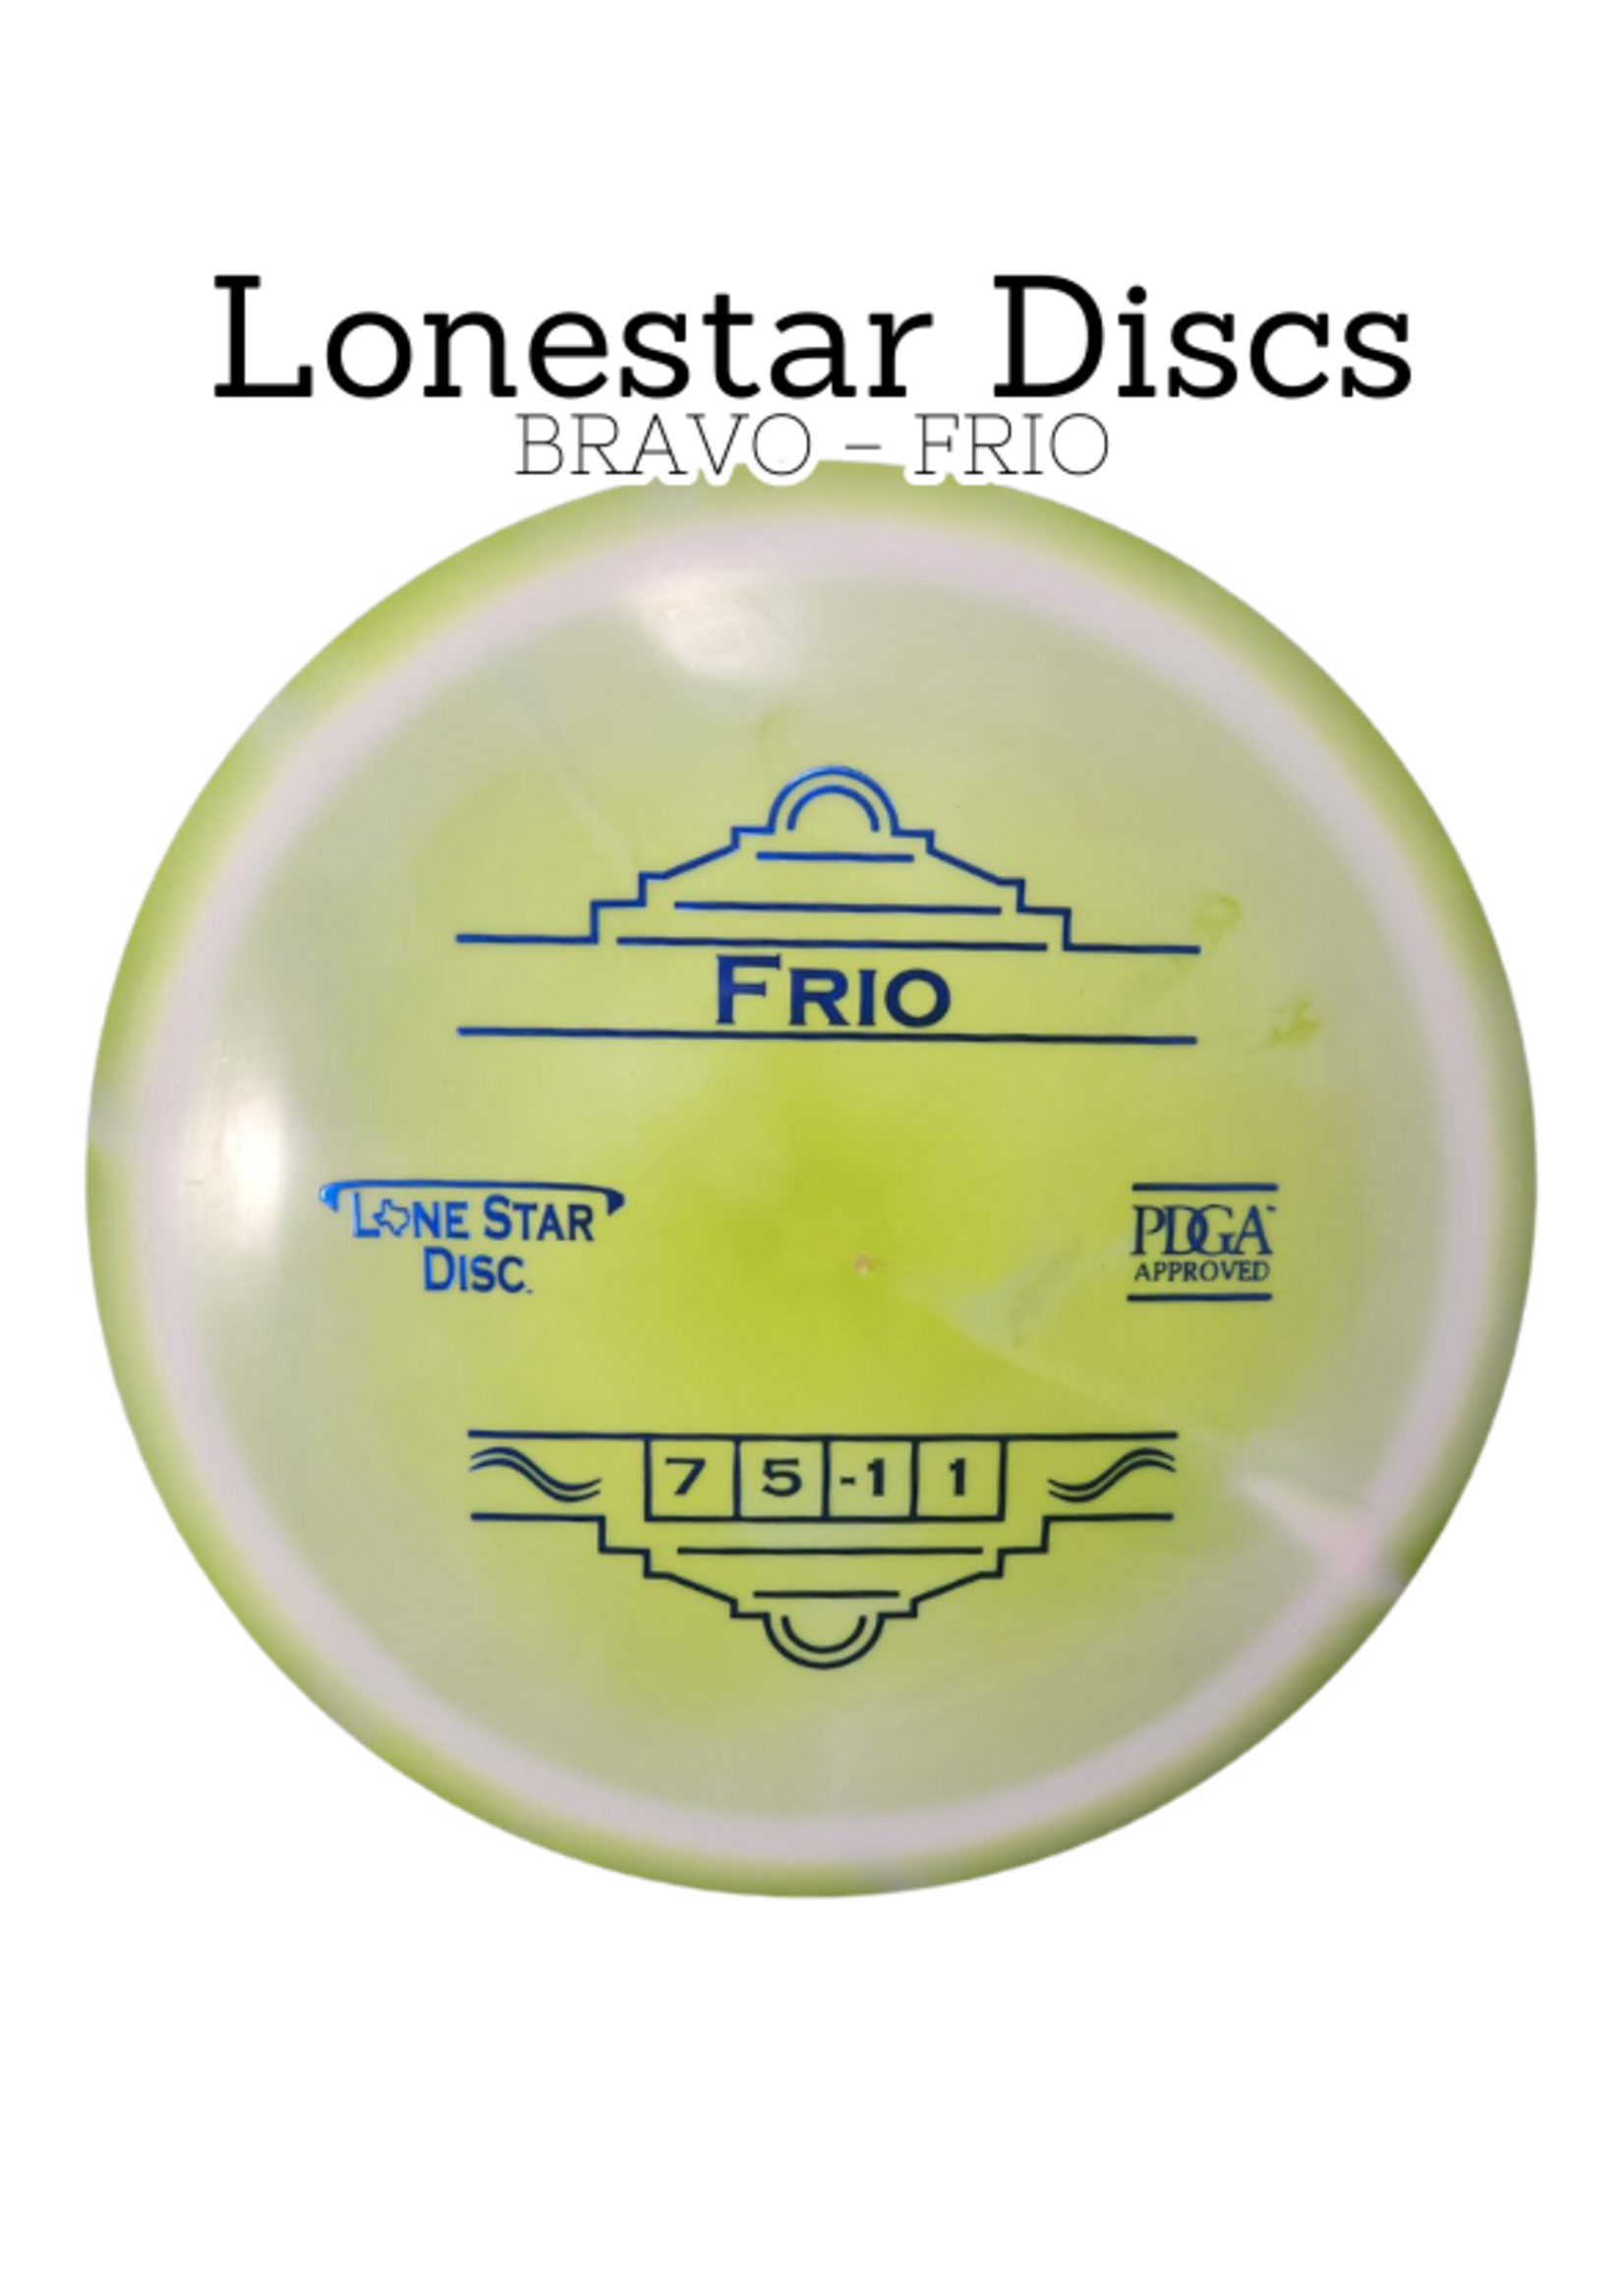 Lonestar Disc Lonestar Disc - Bravo - Frio